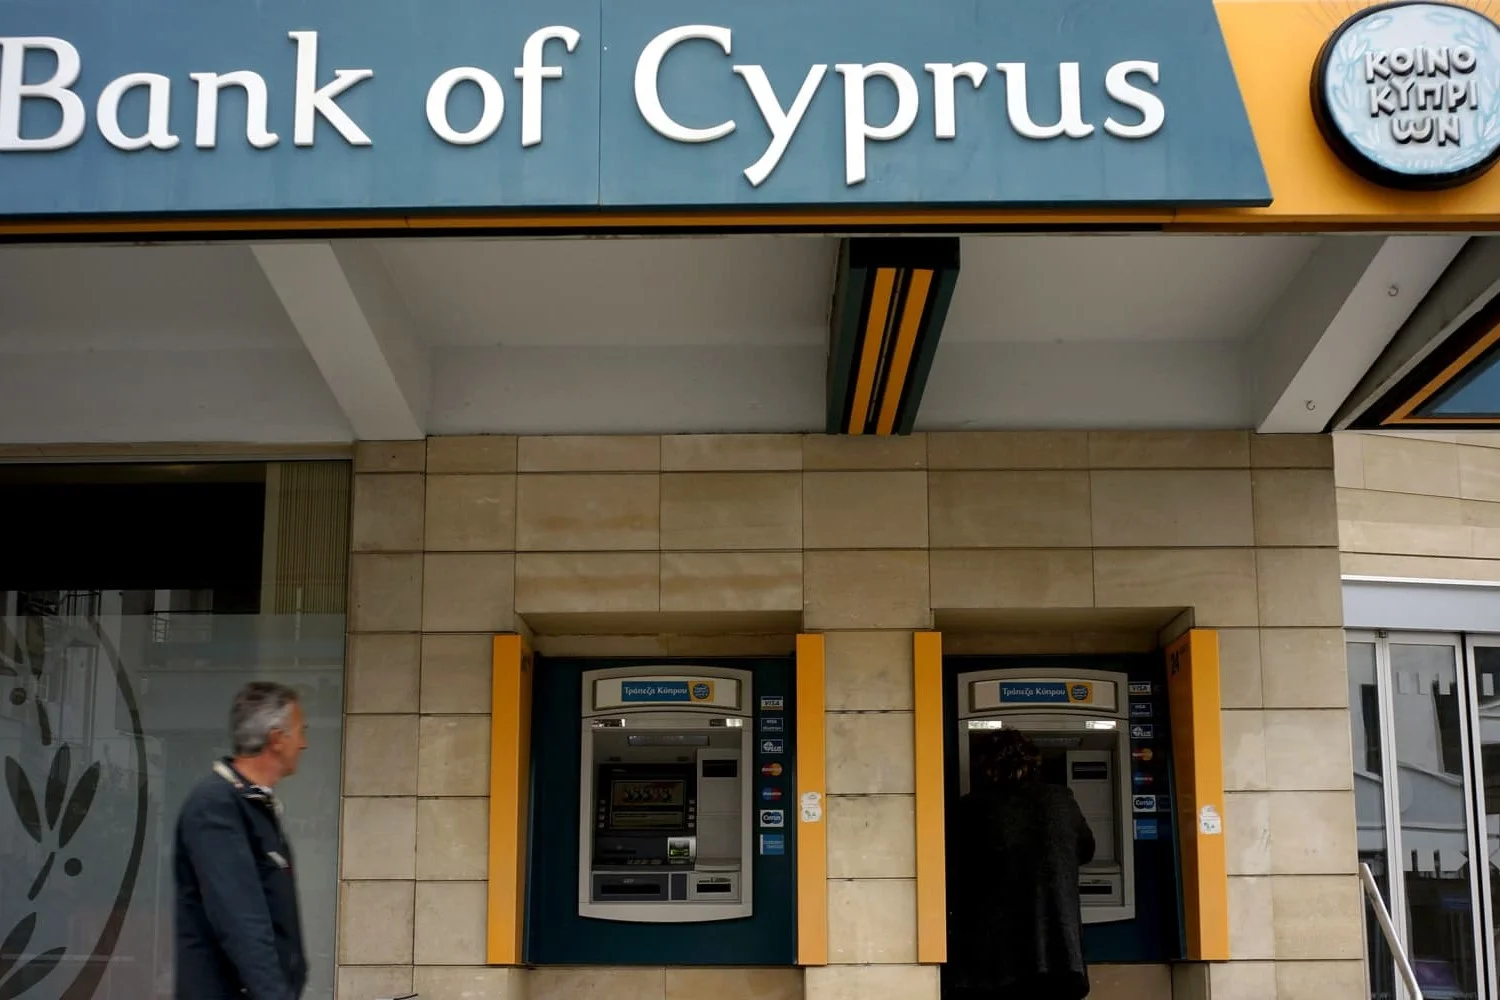 Bank of Cyprus - Csr Environment